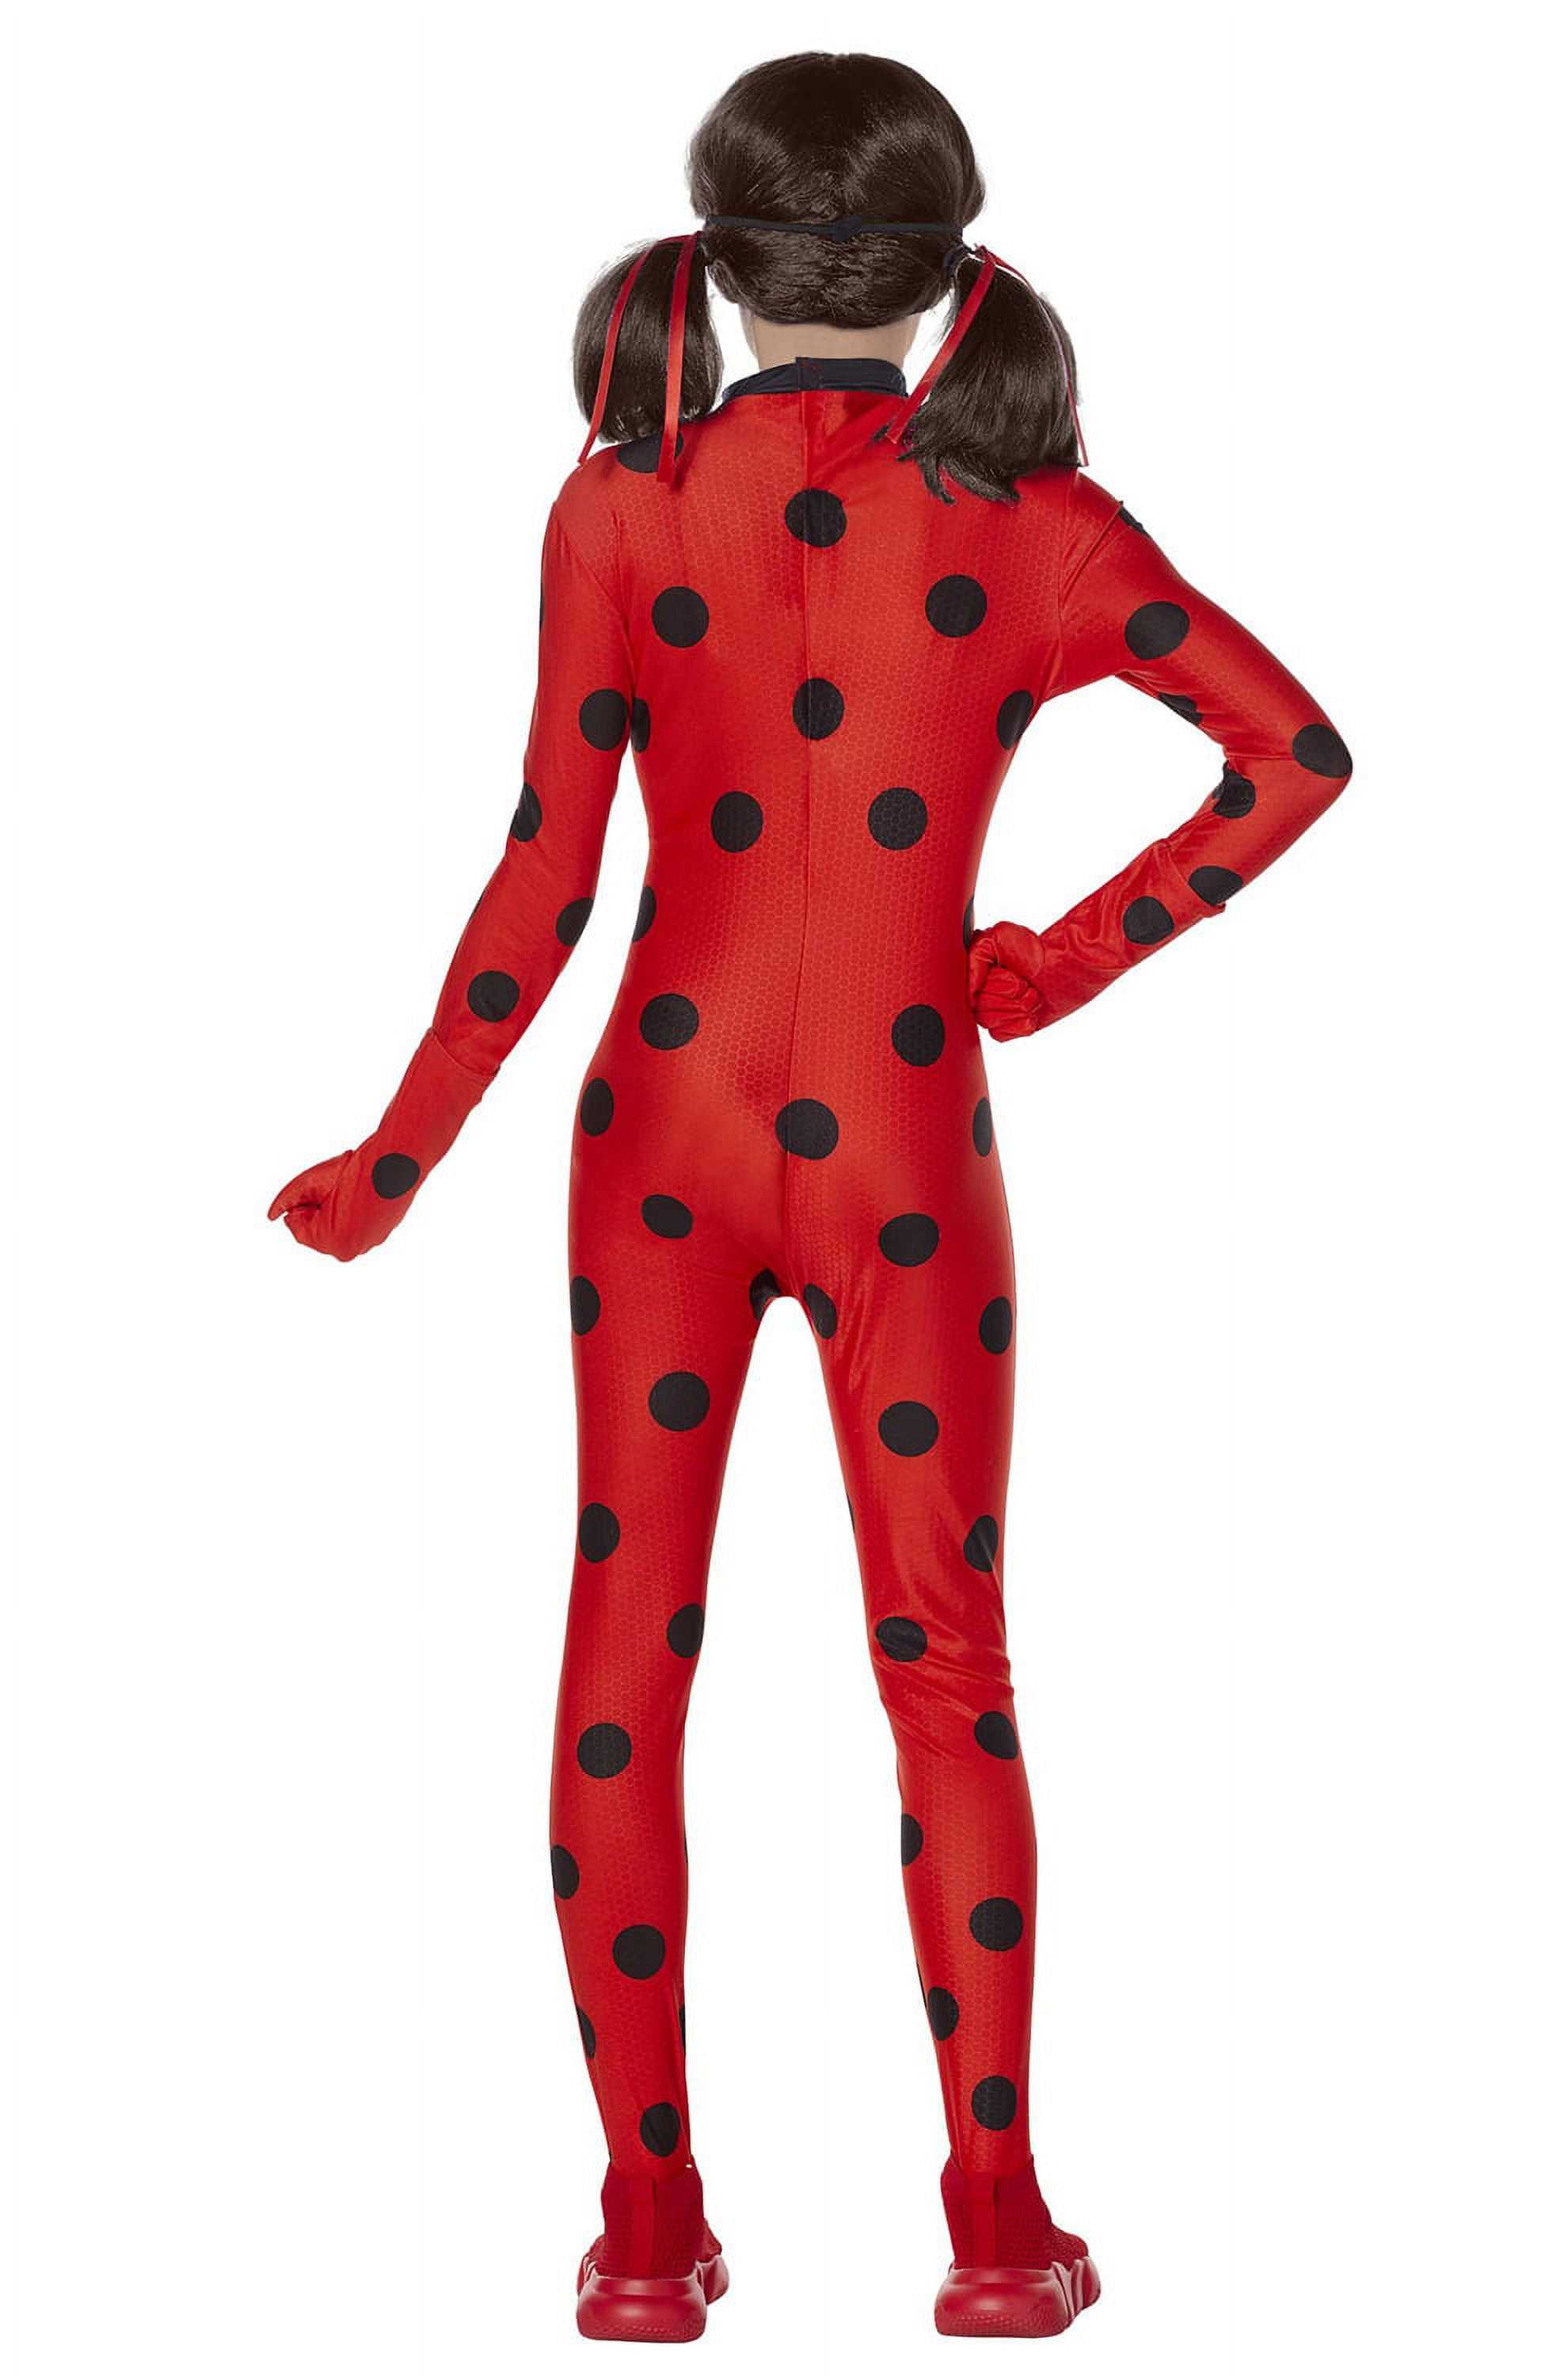 Kids Miraculous Ladybug Costume Kit - Party Time, Inc.